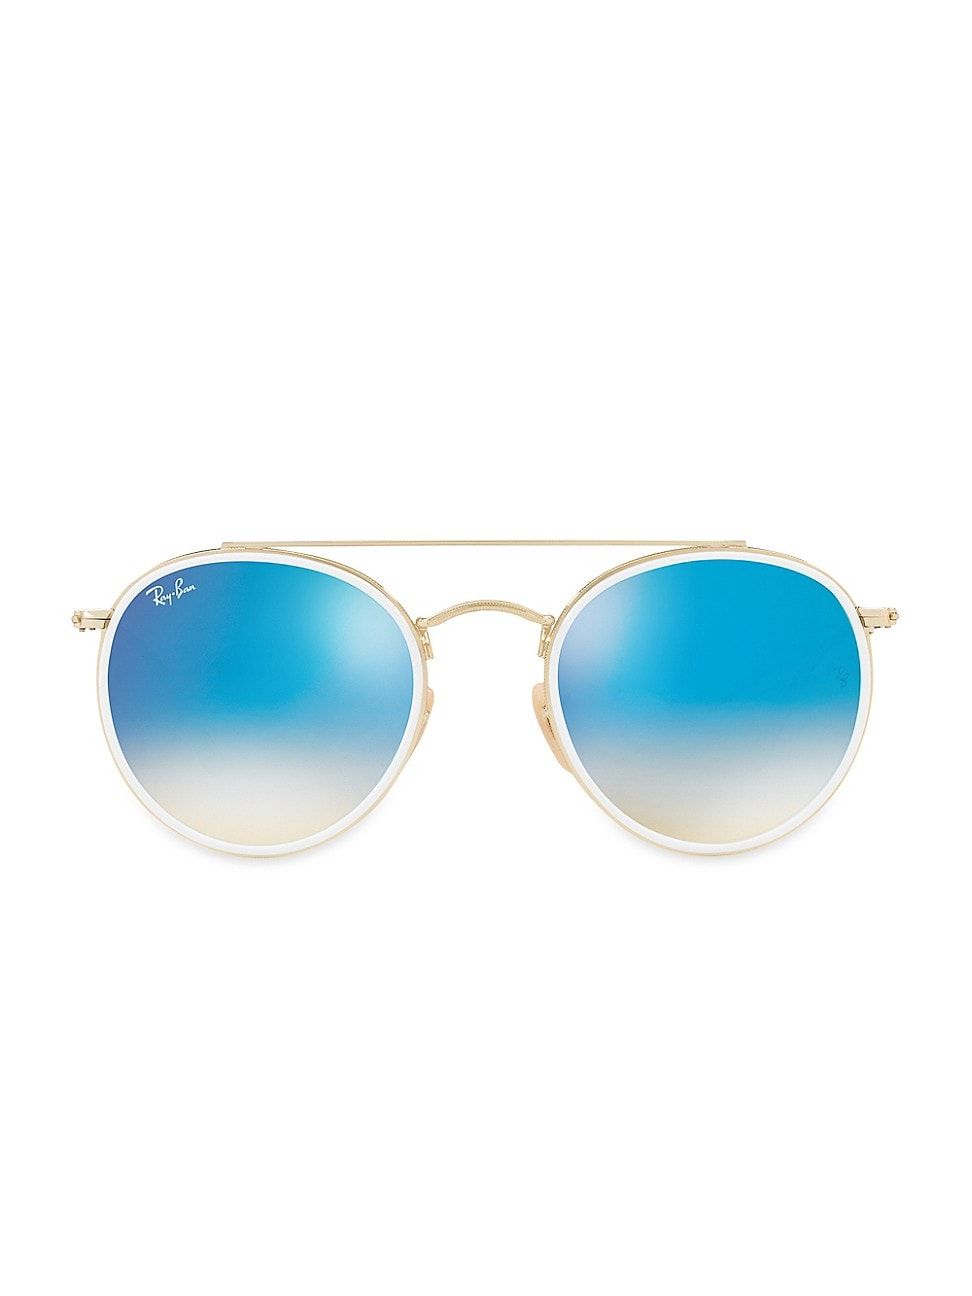 Ray-Ban RB3647 51MM Mirrored Round Aviator Sunglasses | Saks Fifth Avenue